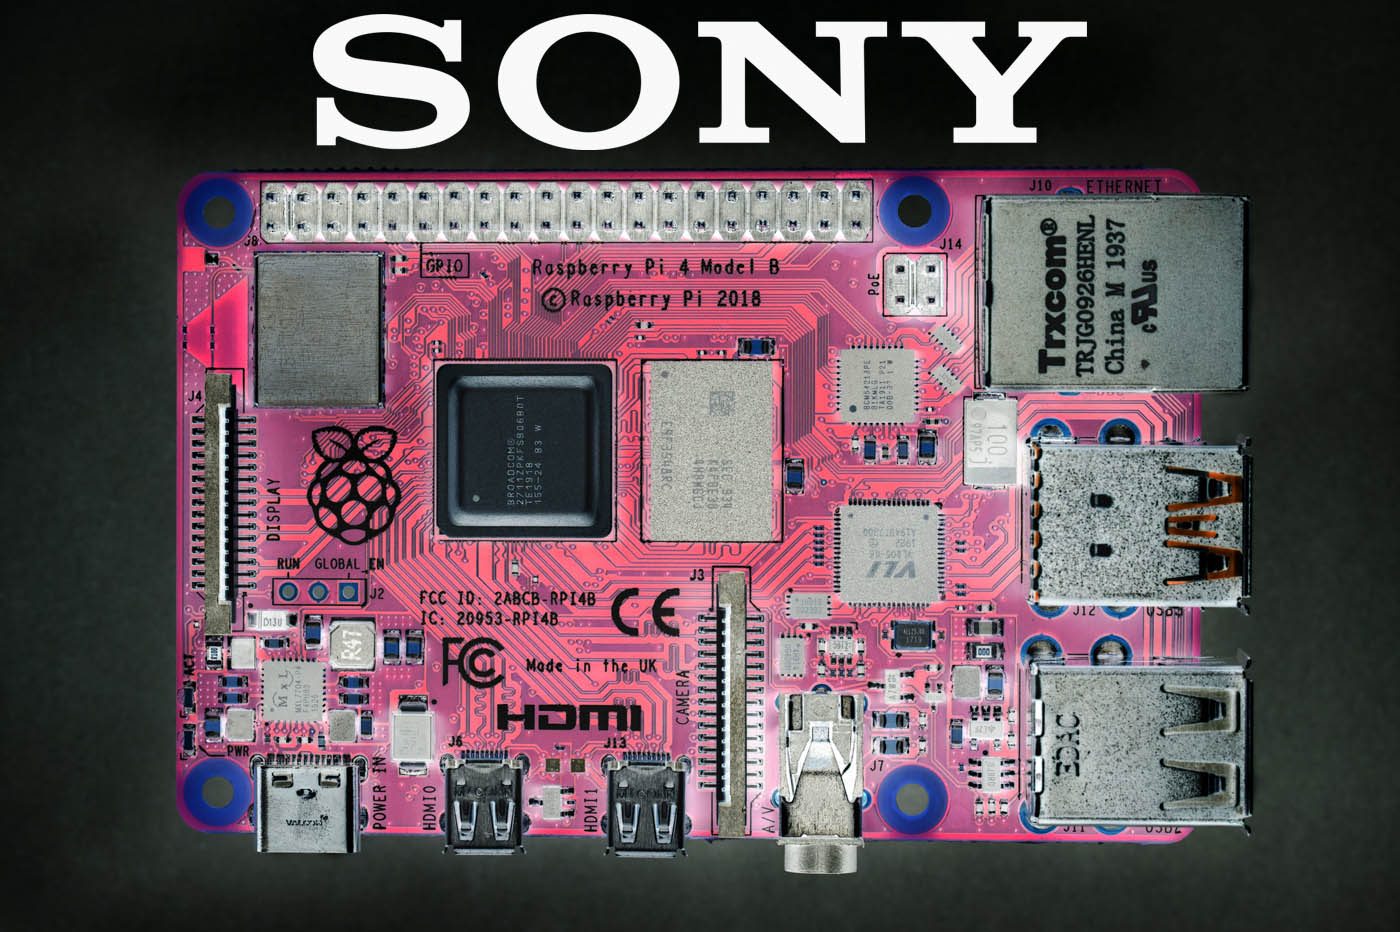 Sony et la fondation Raspberry Pi forgent une alliance